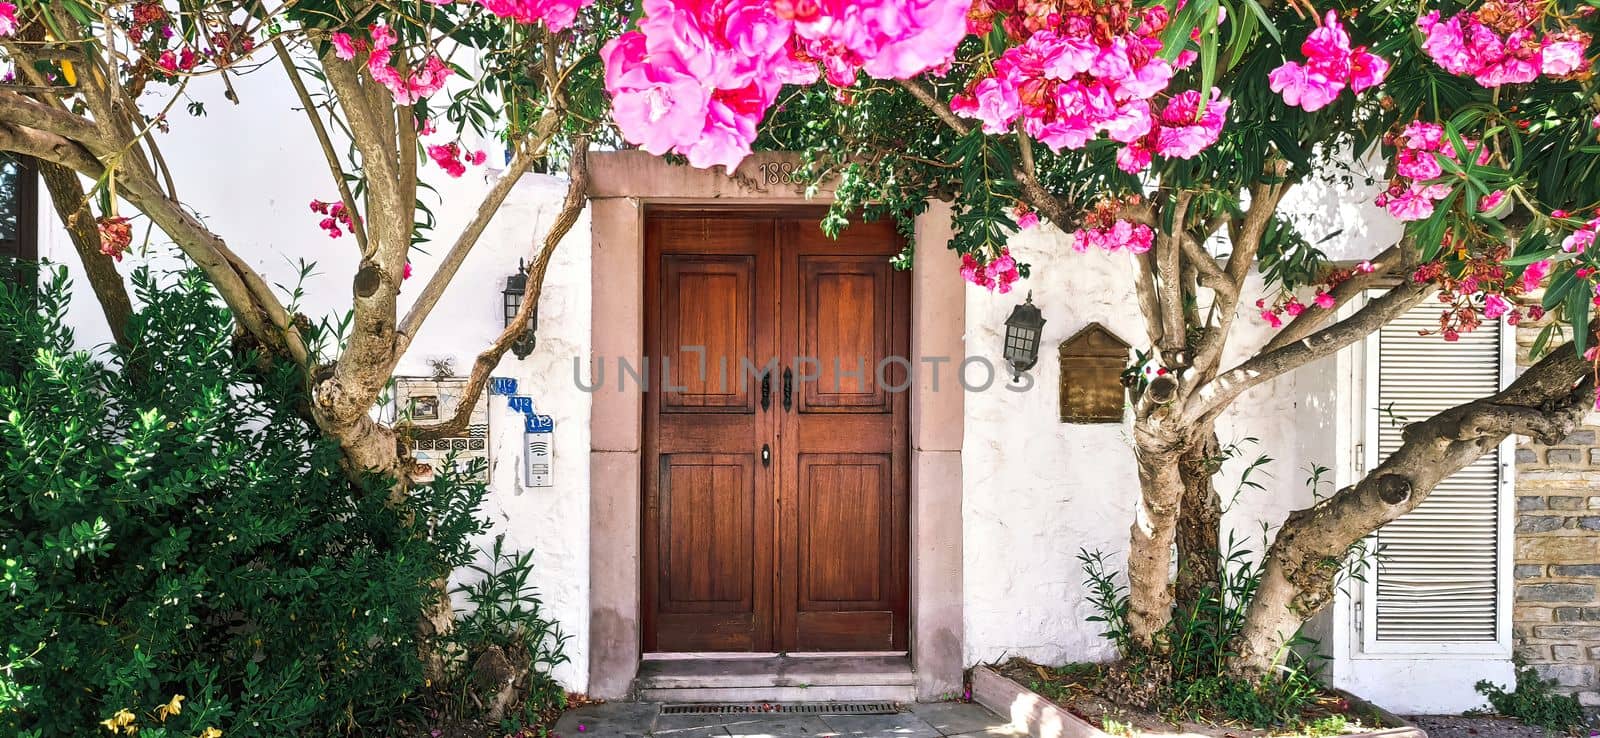 Old wooden door with flowers. download image by igor010